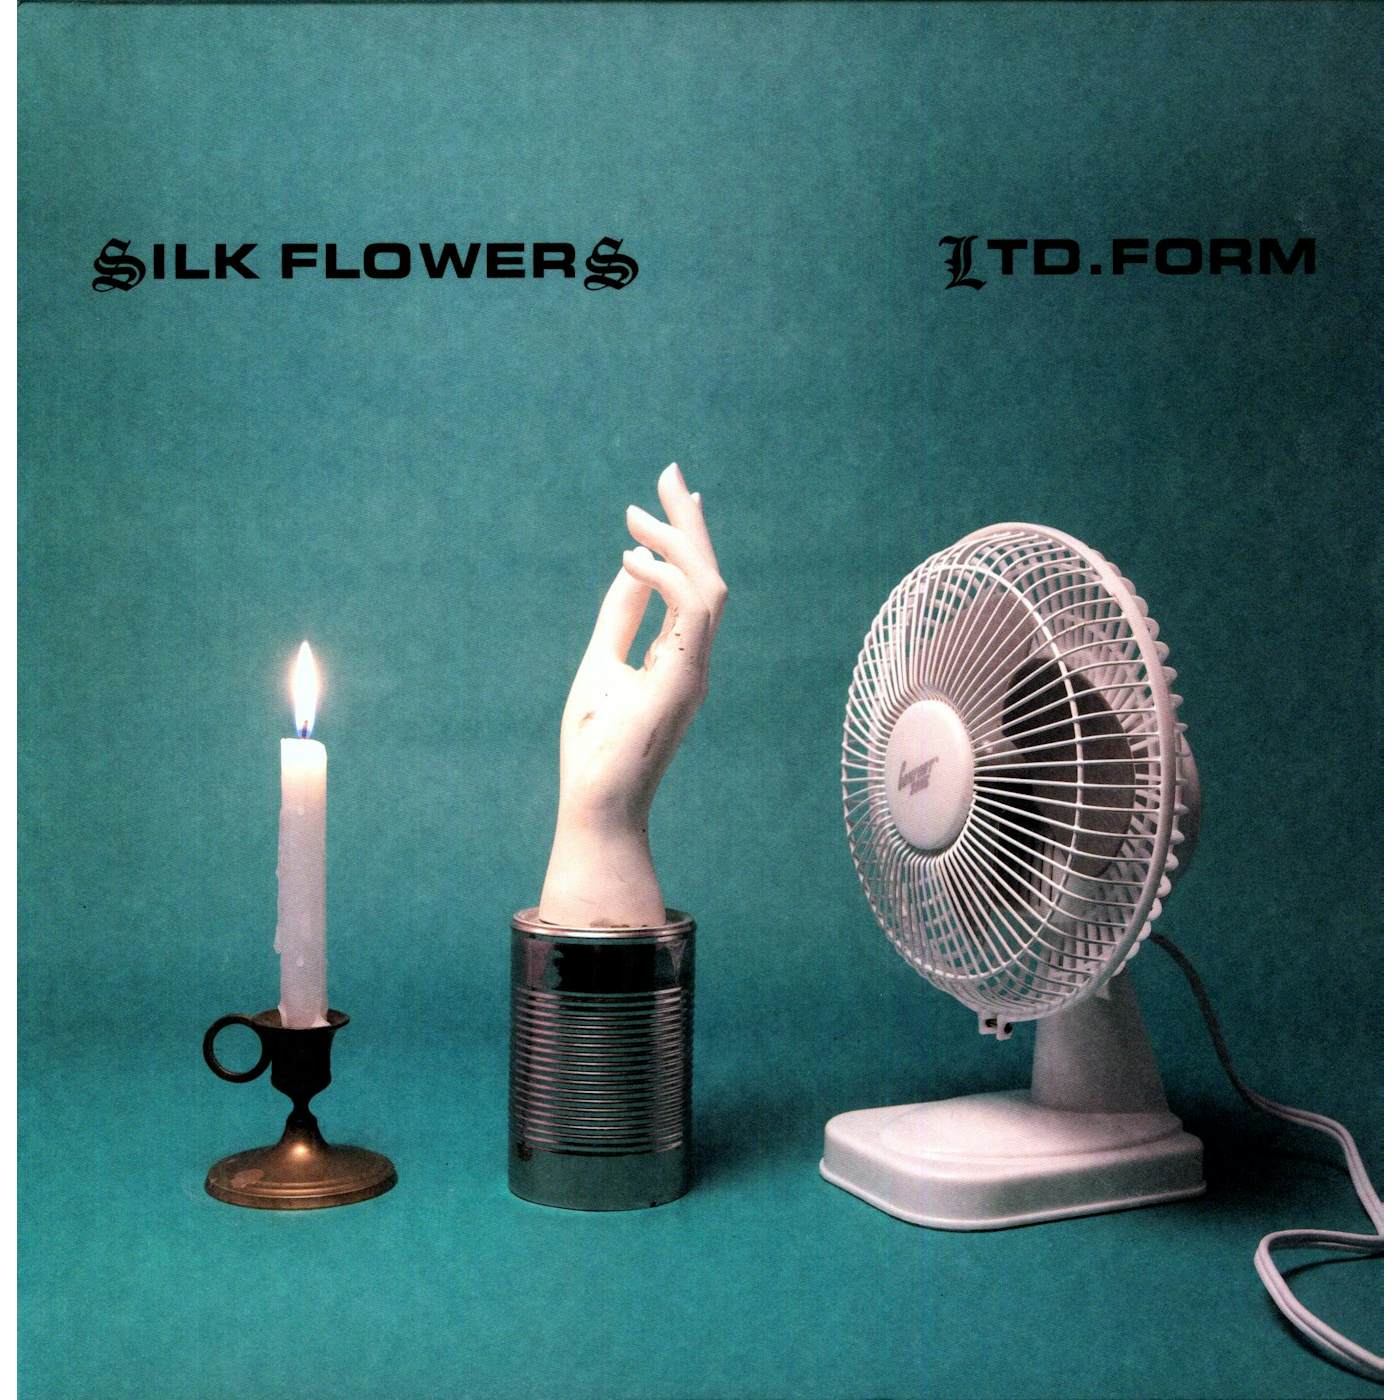 Silk Flowers LTD FORM Vinyl Record